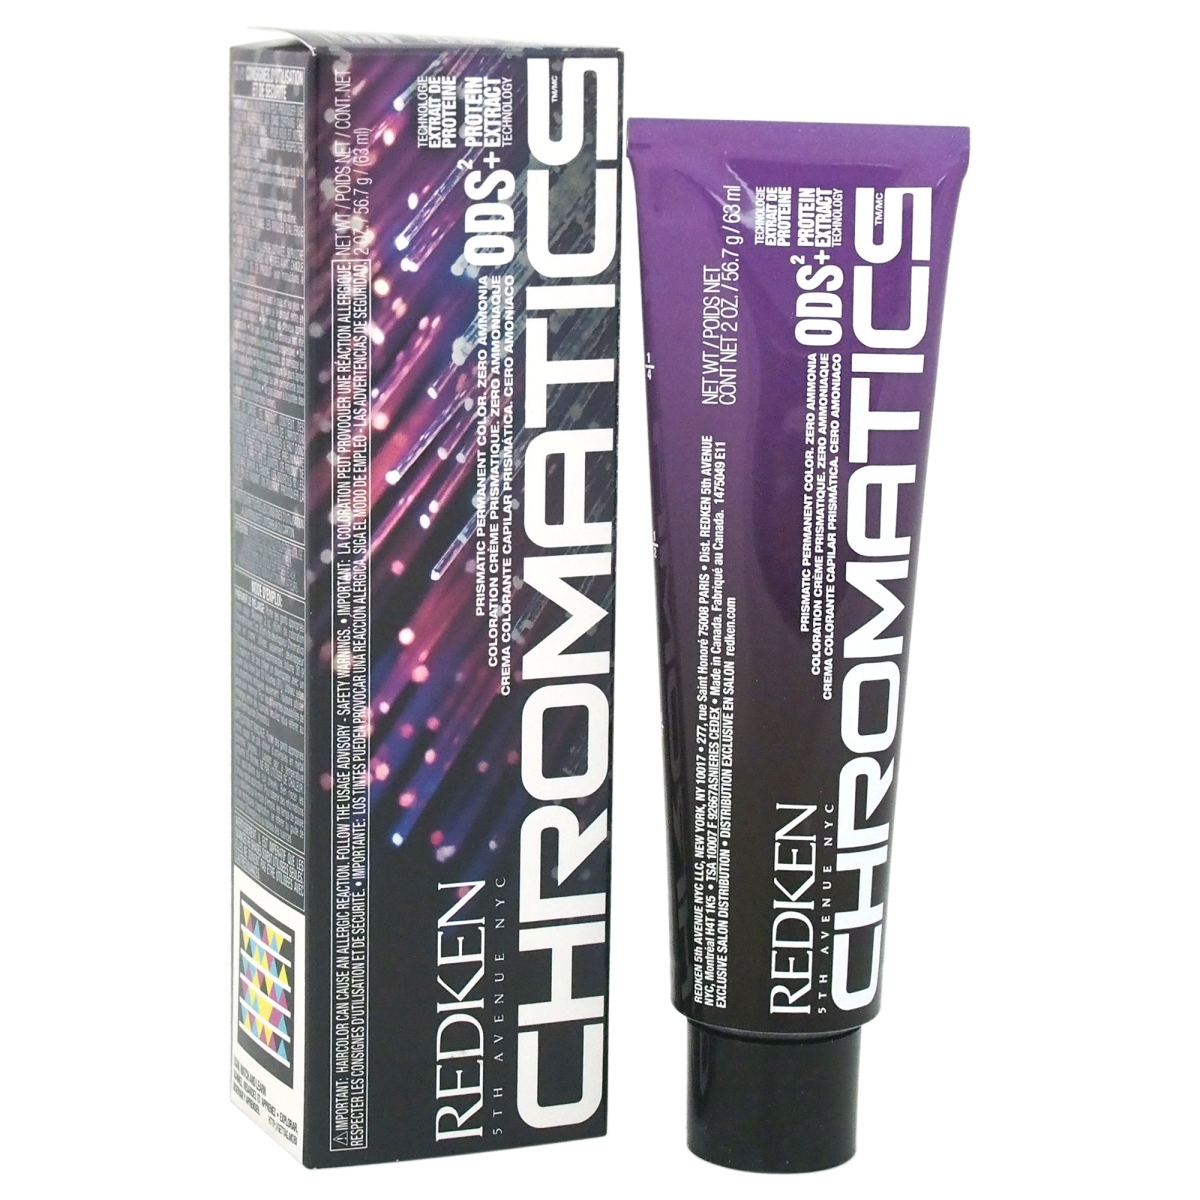 U-hc-8261 2 Oz 5n Unisex Chromatics Prismatic Hair Color, Natural